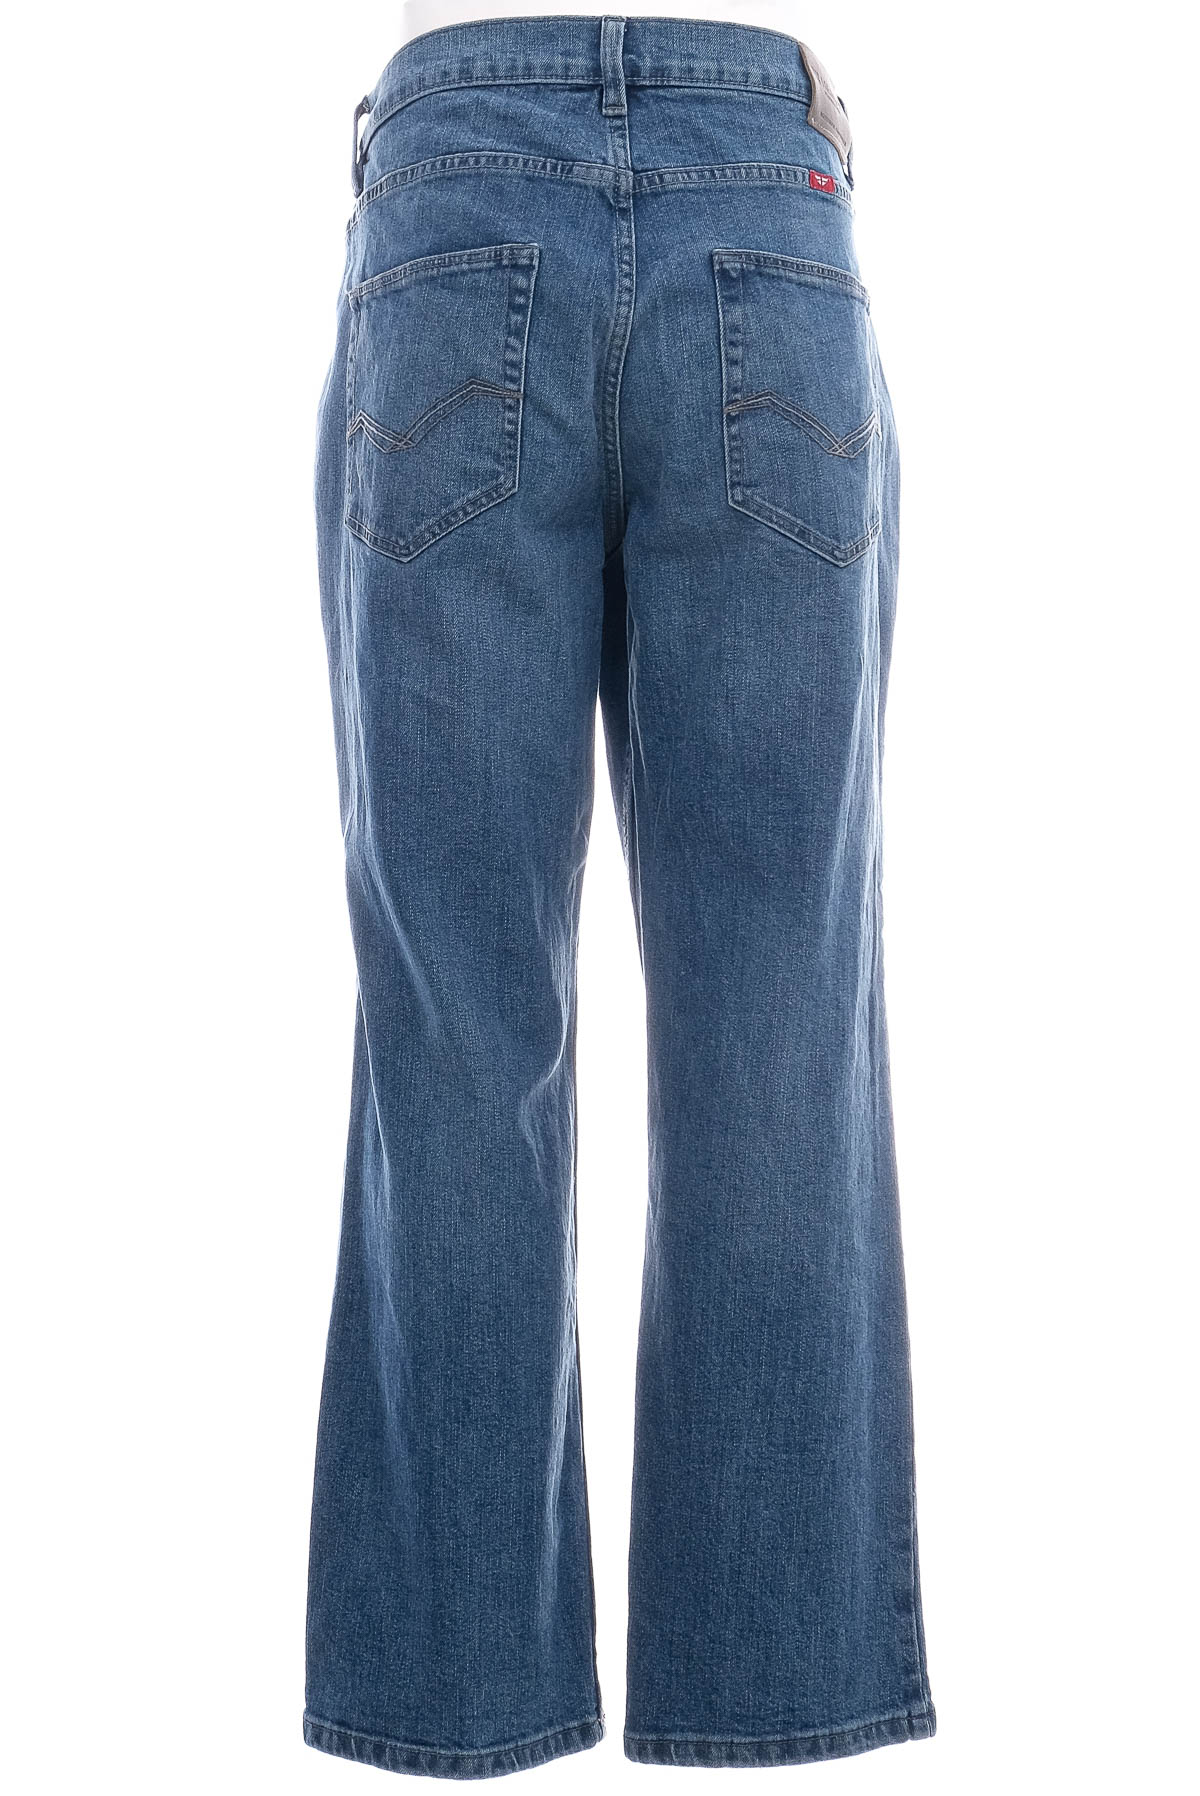 Jeans pentru bărbăți - HERO BY JOHN MEDOOX - 1